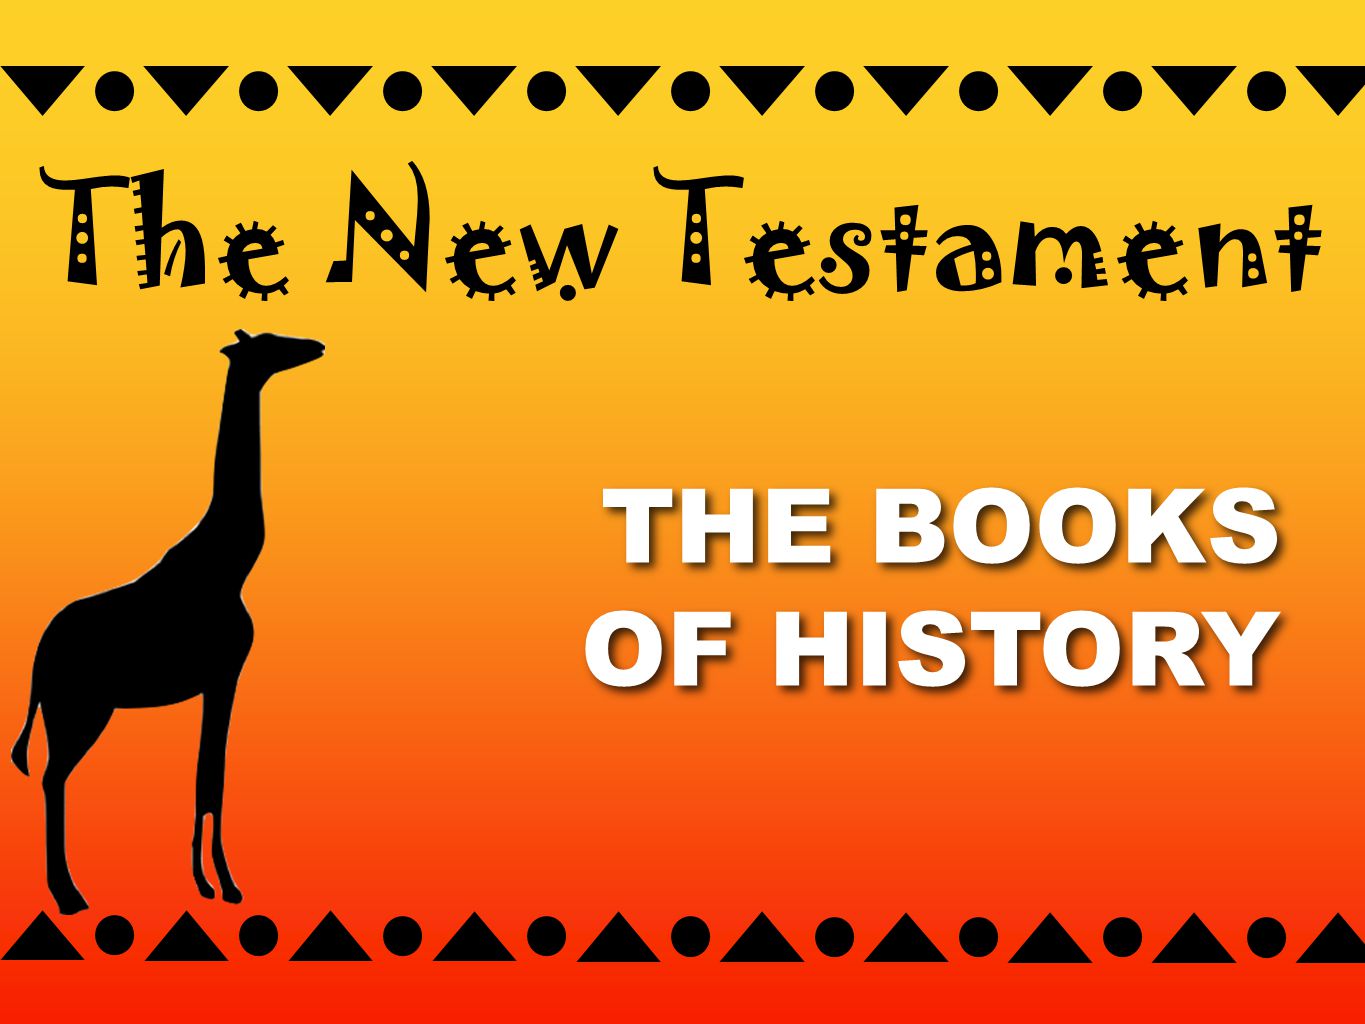 THE BOOKS OF HISTORY THE BOOKS OF HISTORY The New Testament